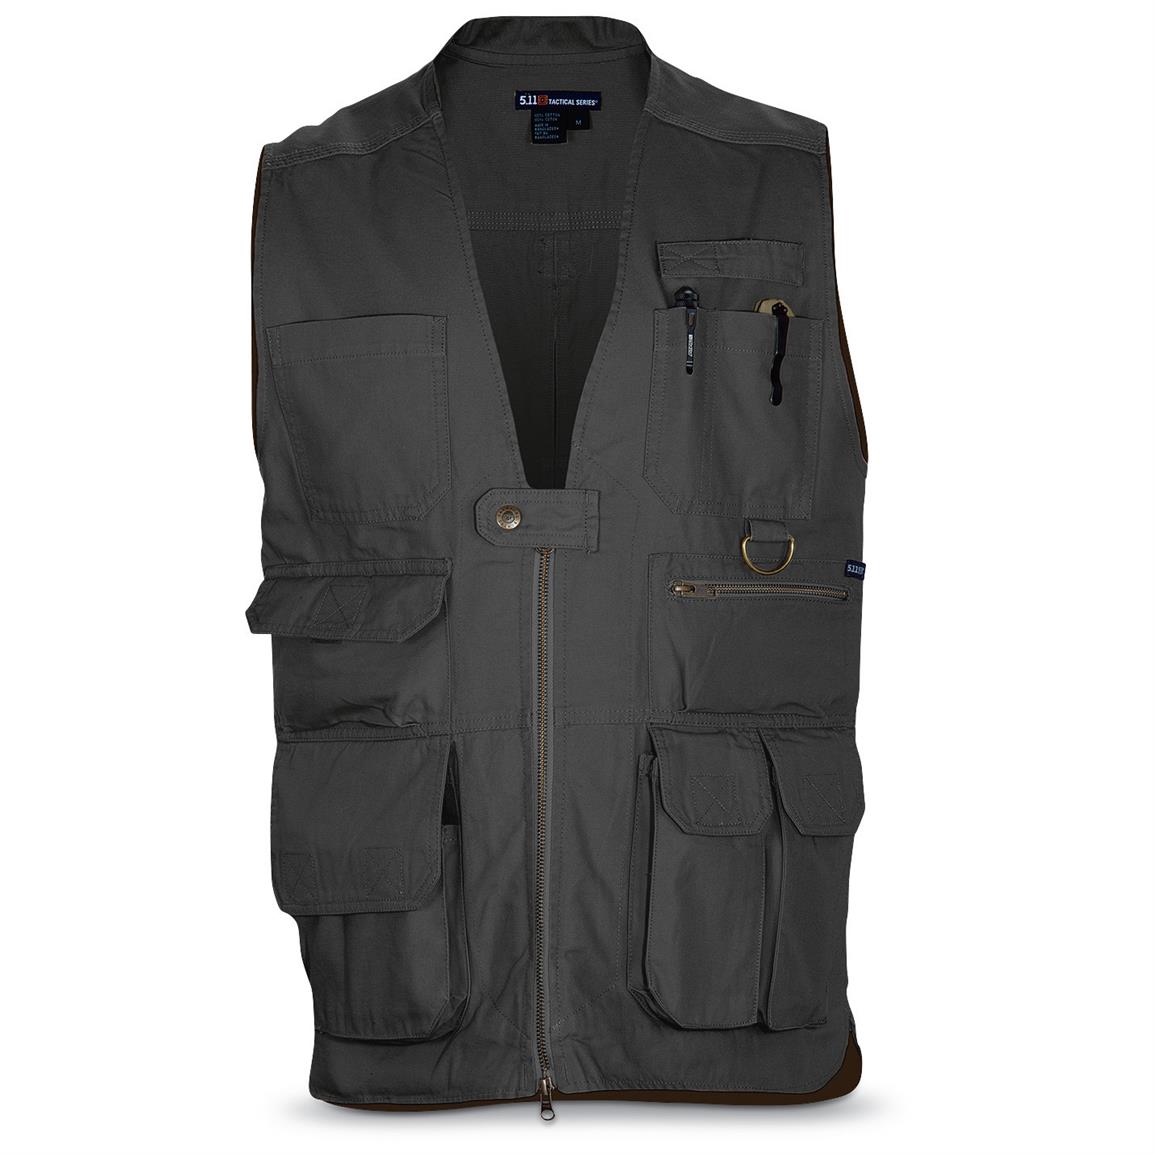 5.11 Men's Tactical Vest - 676796, Tactical Clothing at Sportsman's Guide